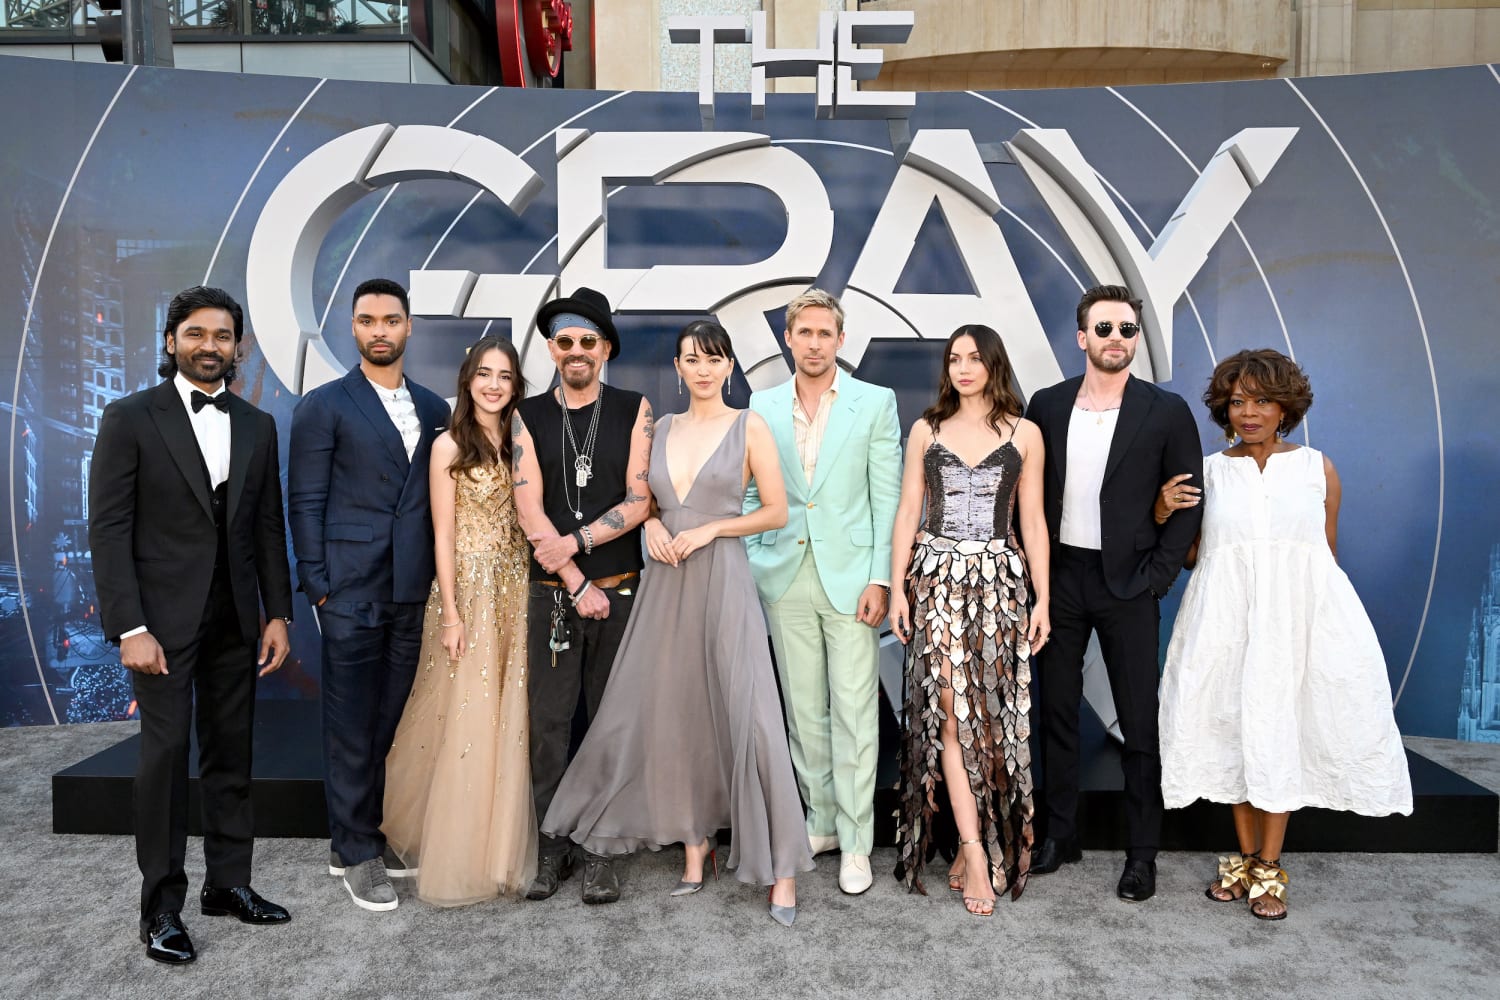 THE GRAY MAN cast & creators talk inspirations in exclusive